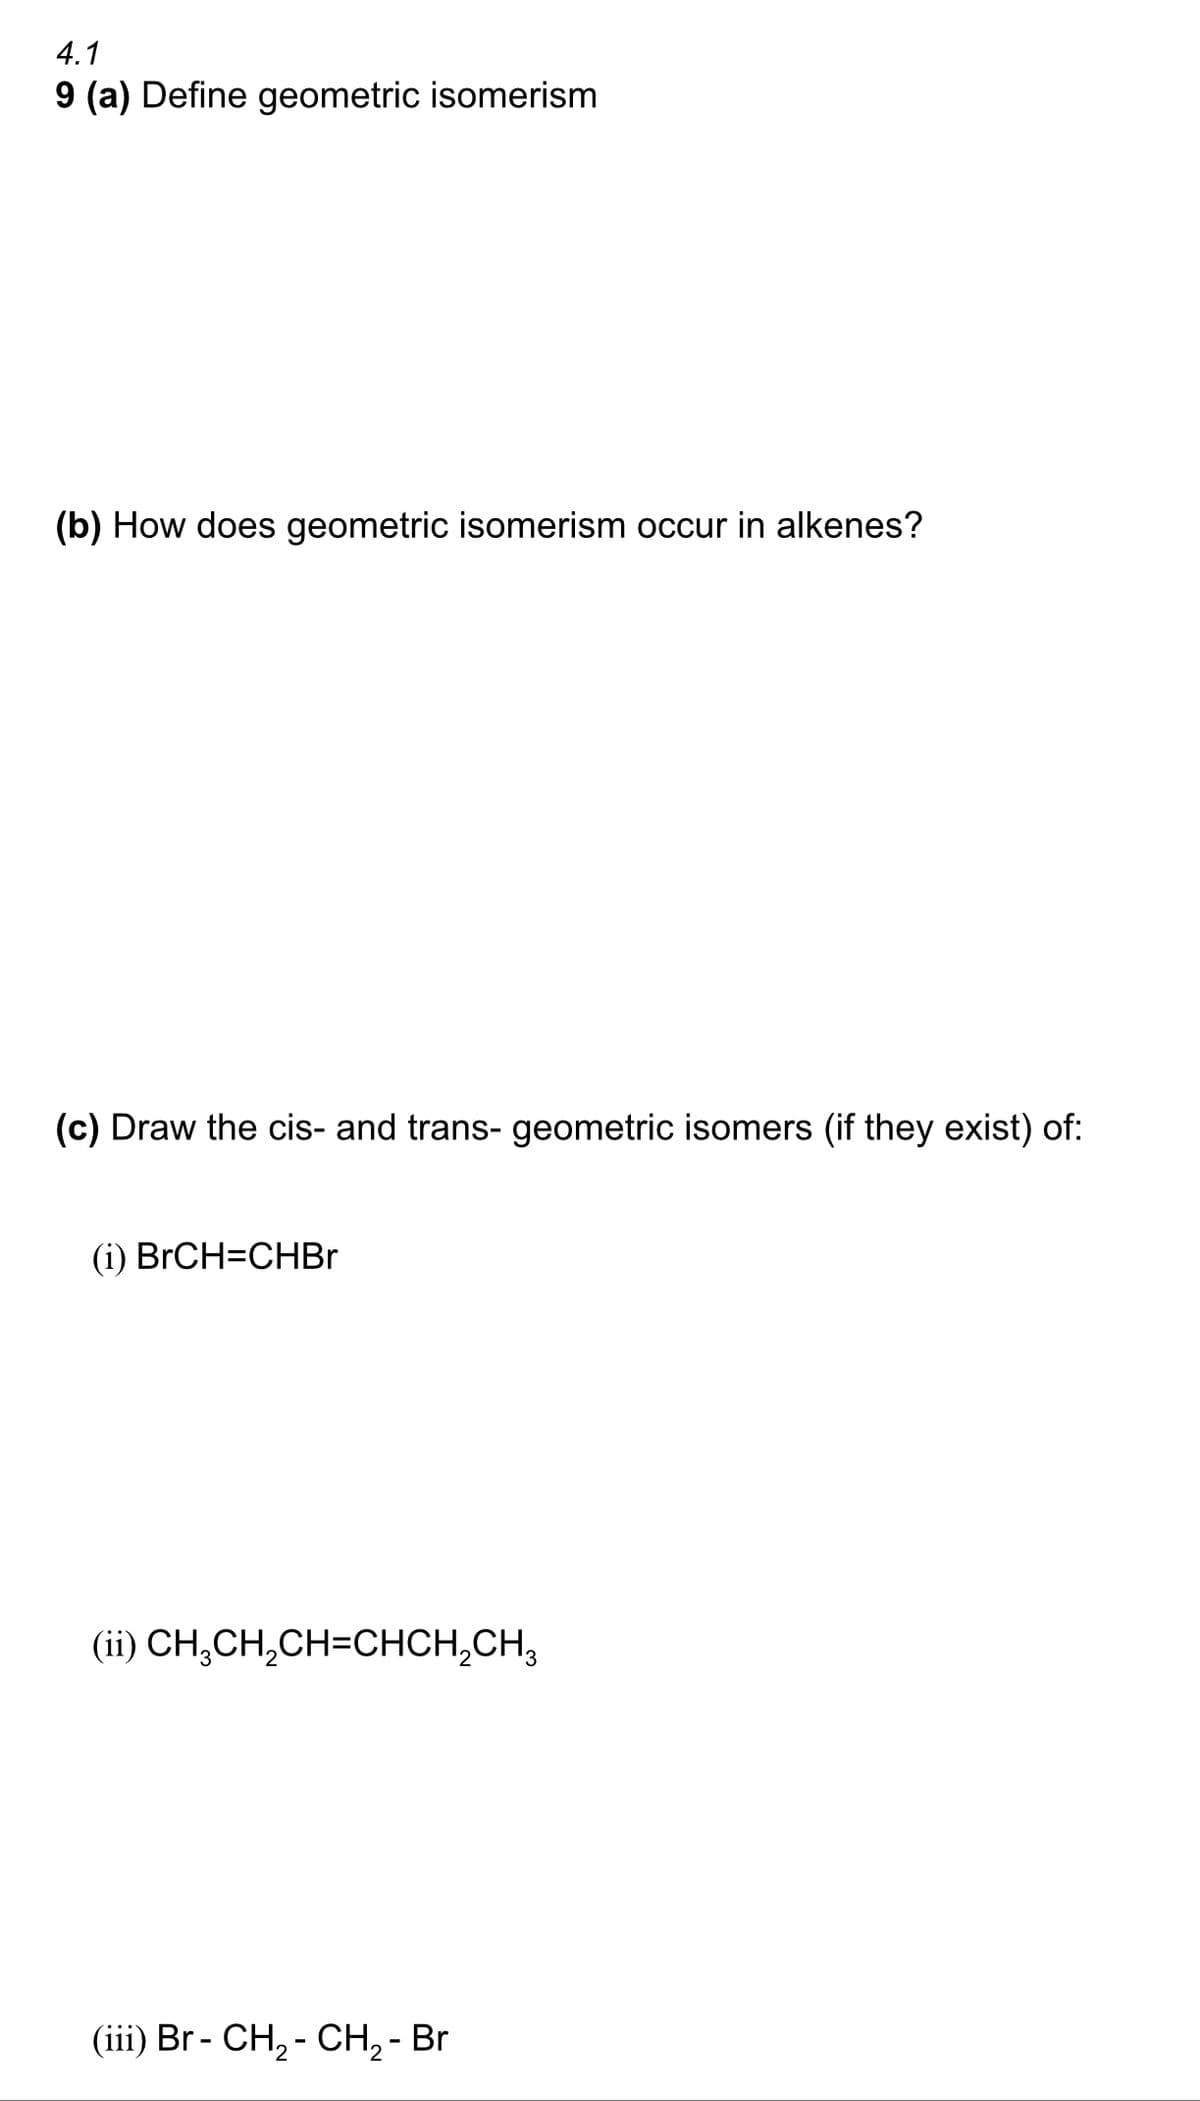 4.1
9 (a) Define geometric isomerism
(b) How does geometric isomerism occur in alkenes?
(c) Draw the cis- and trans- geometric isomers (if they exist) of:
(i) BrCH=CHBr
(ii) CH,CH,CH=CHCH,CH,
(iii) Br- CH₂ - CH₂ - Br